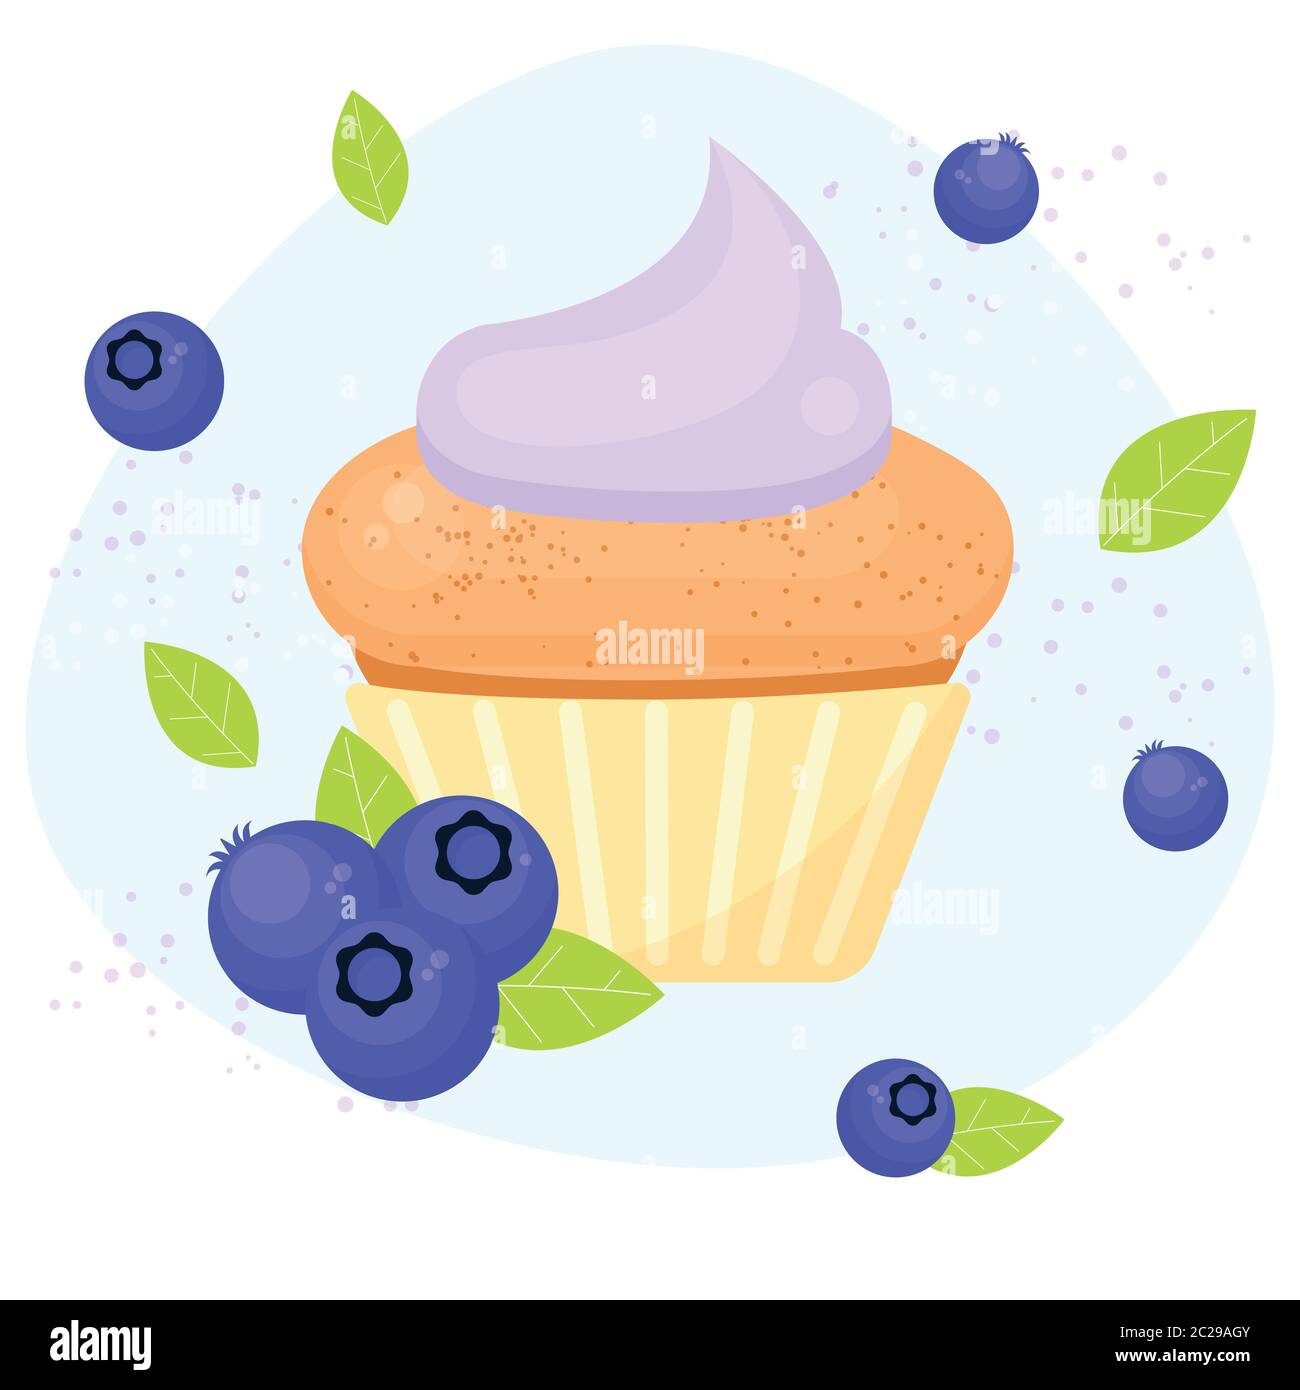 https://c8.alamy.com/comp/2C29AGY/blueberry-muffin-with-cream-tasty-cute-dessert-with-berries-2C29AGY.jpg